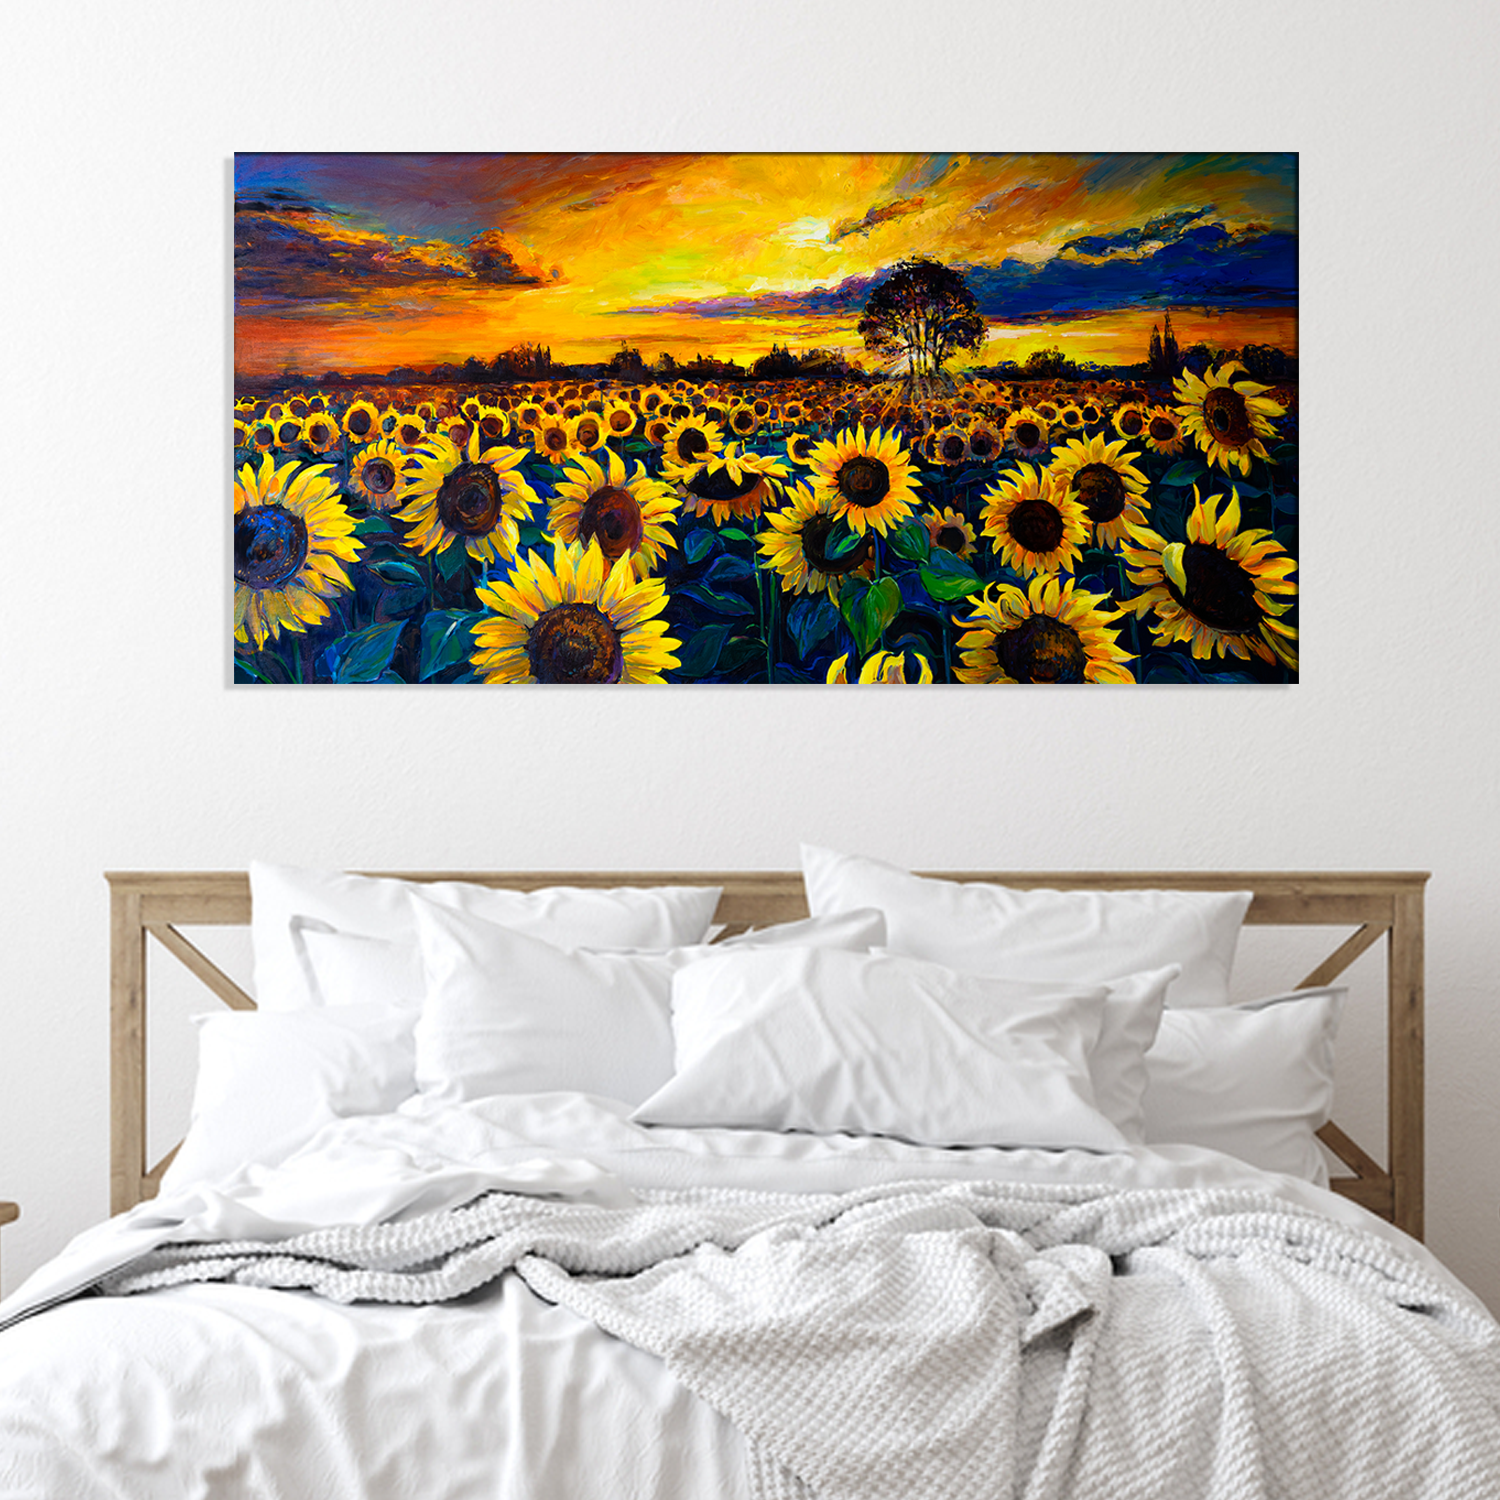 Sunset Sunflower Field Canvas Print Wall Painting